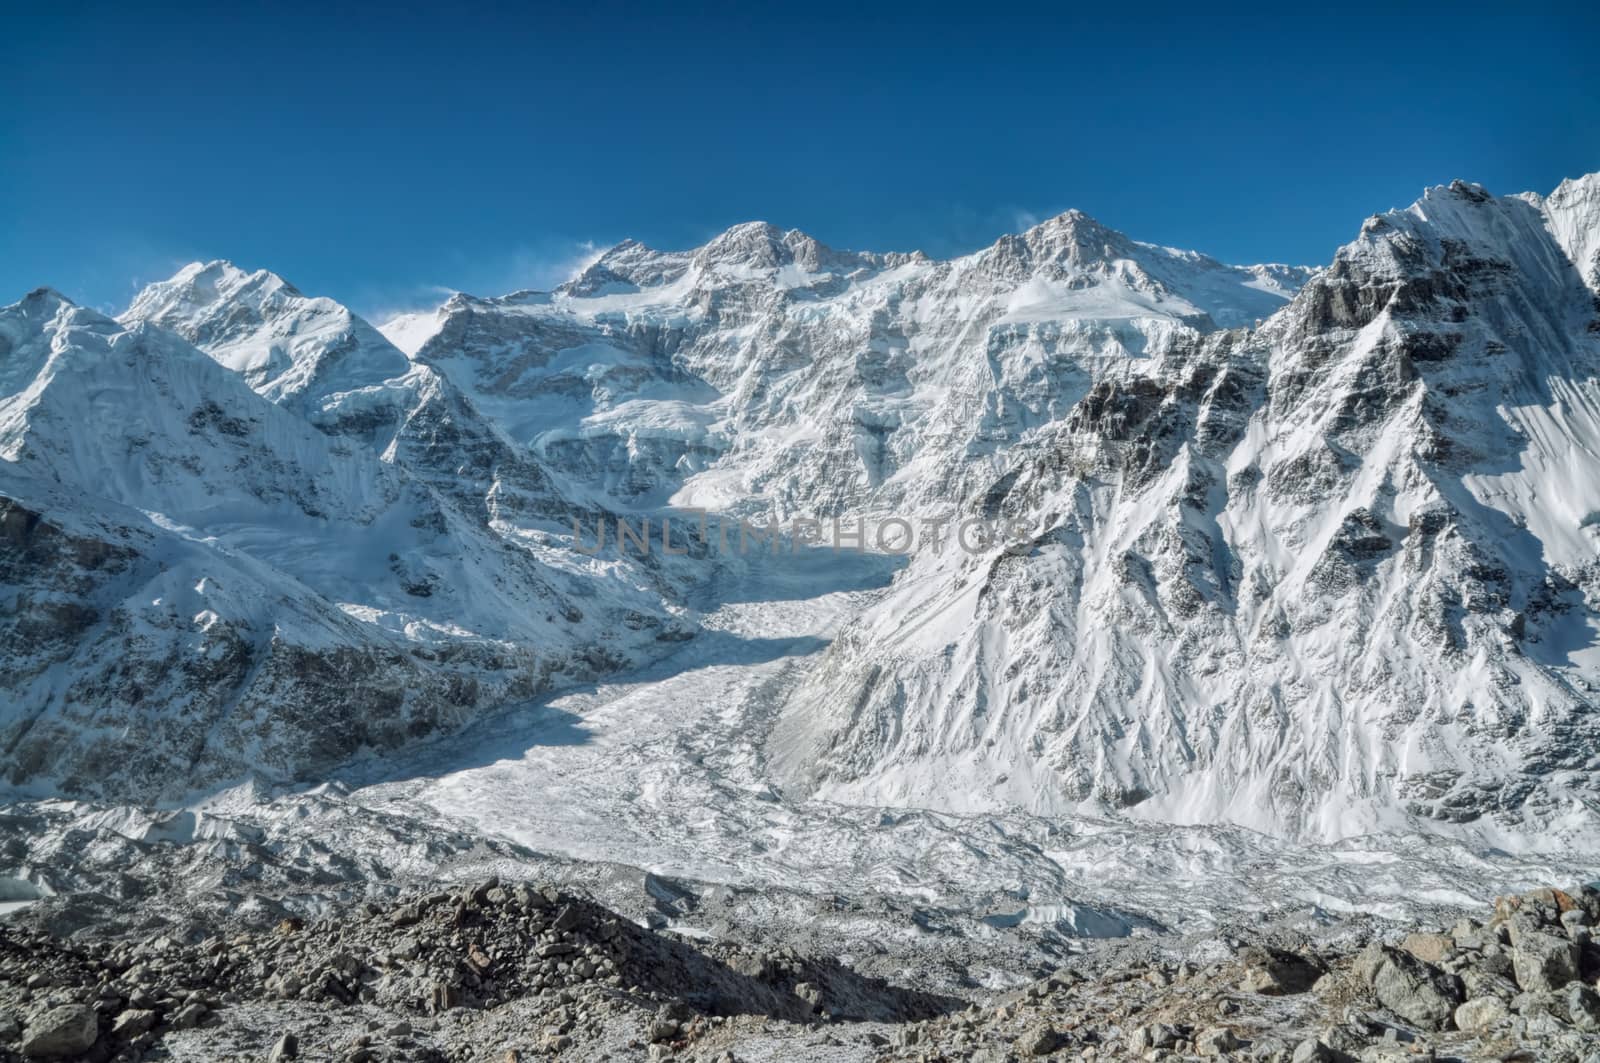 Breathtaking view of snowy Kangchenjunga mountains in Nepal